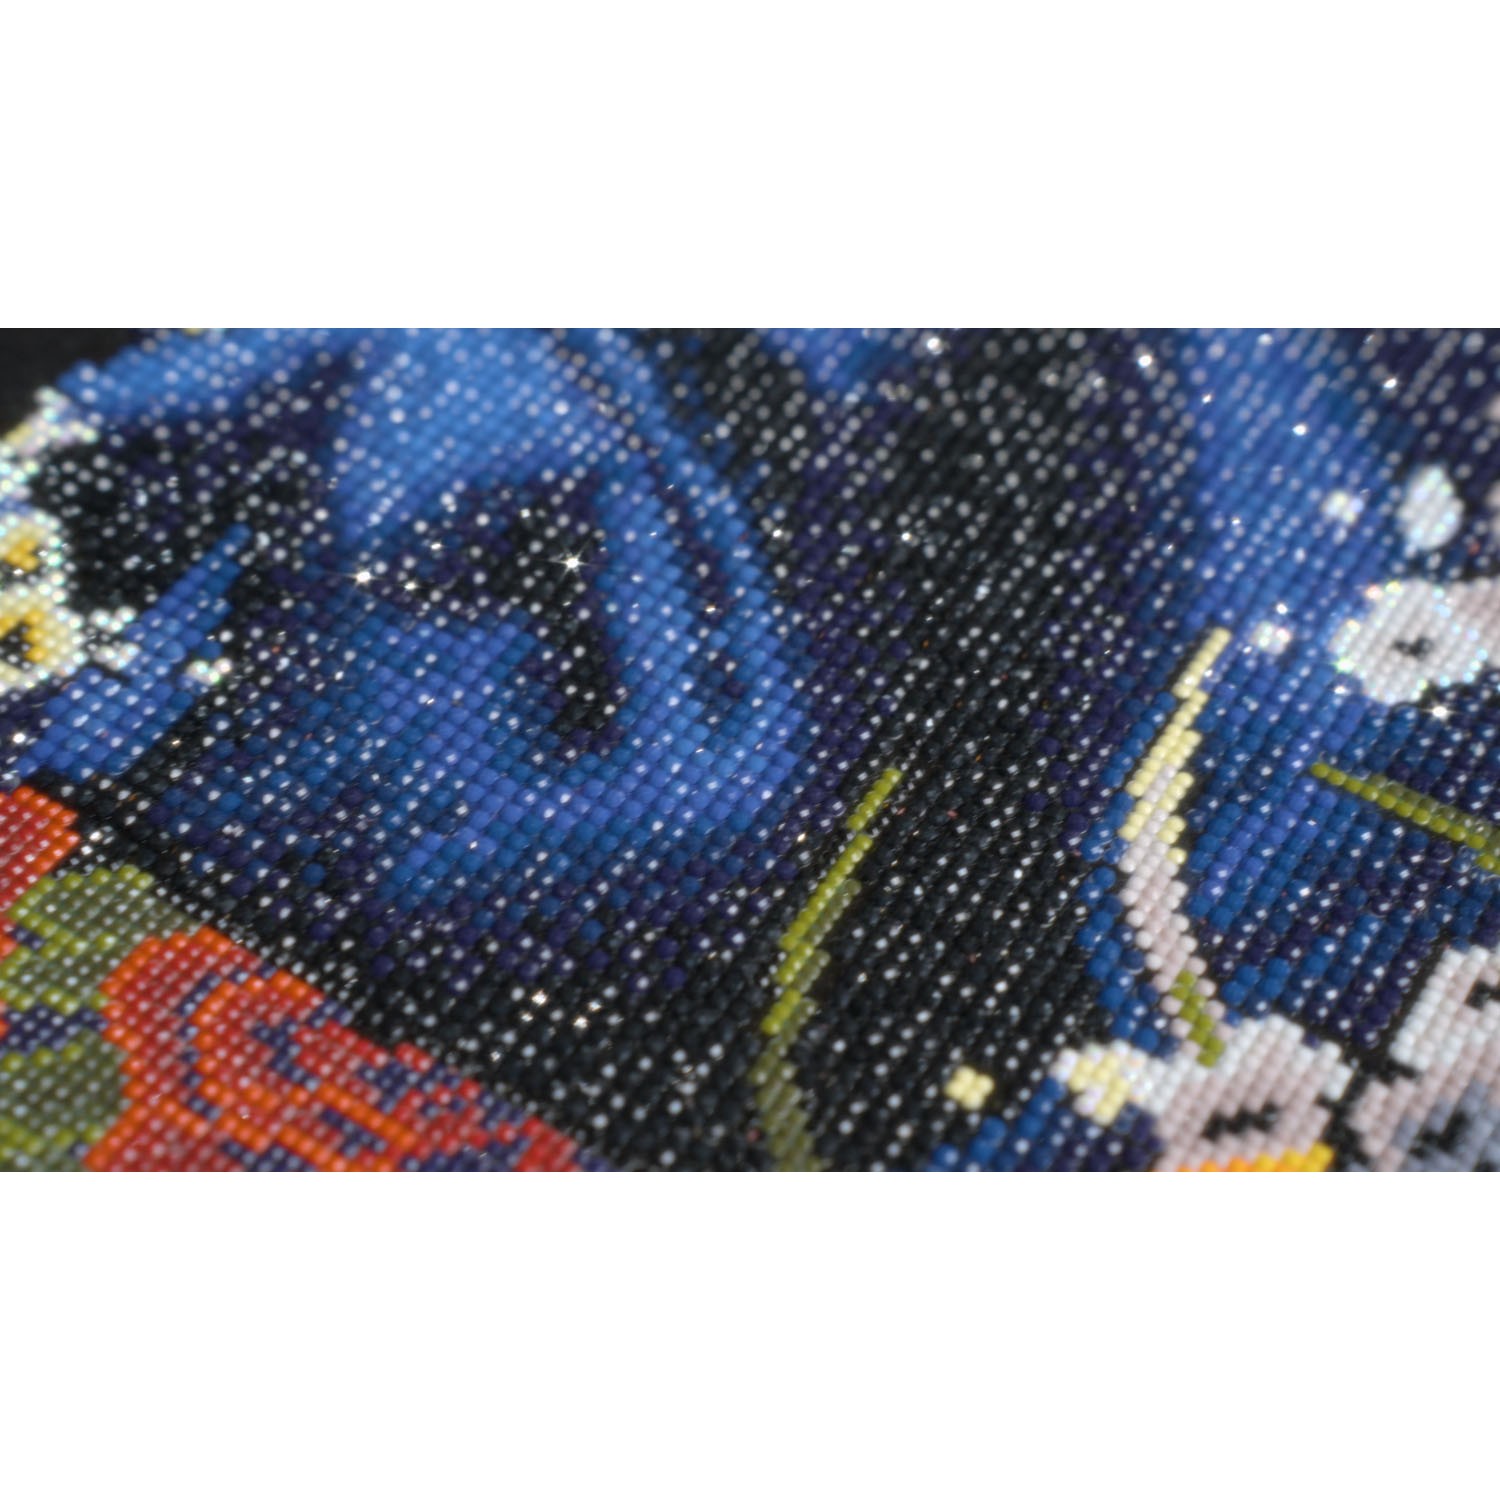 CEOVR Stitch Diamond Painting Kits for Adults, Blue Starry Stitch